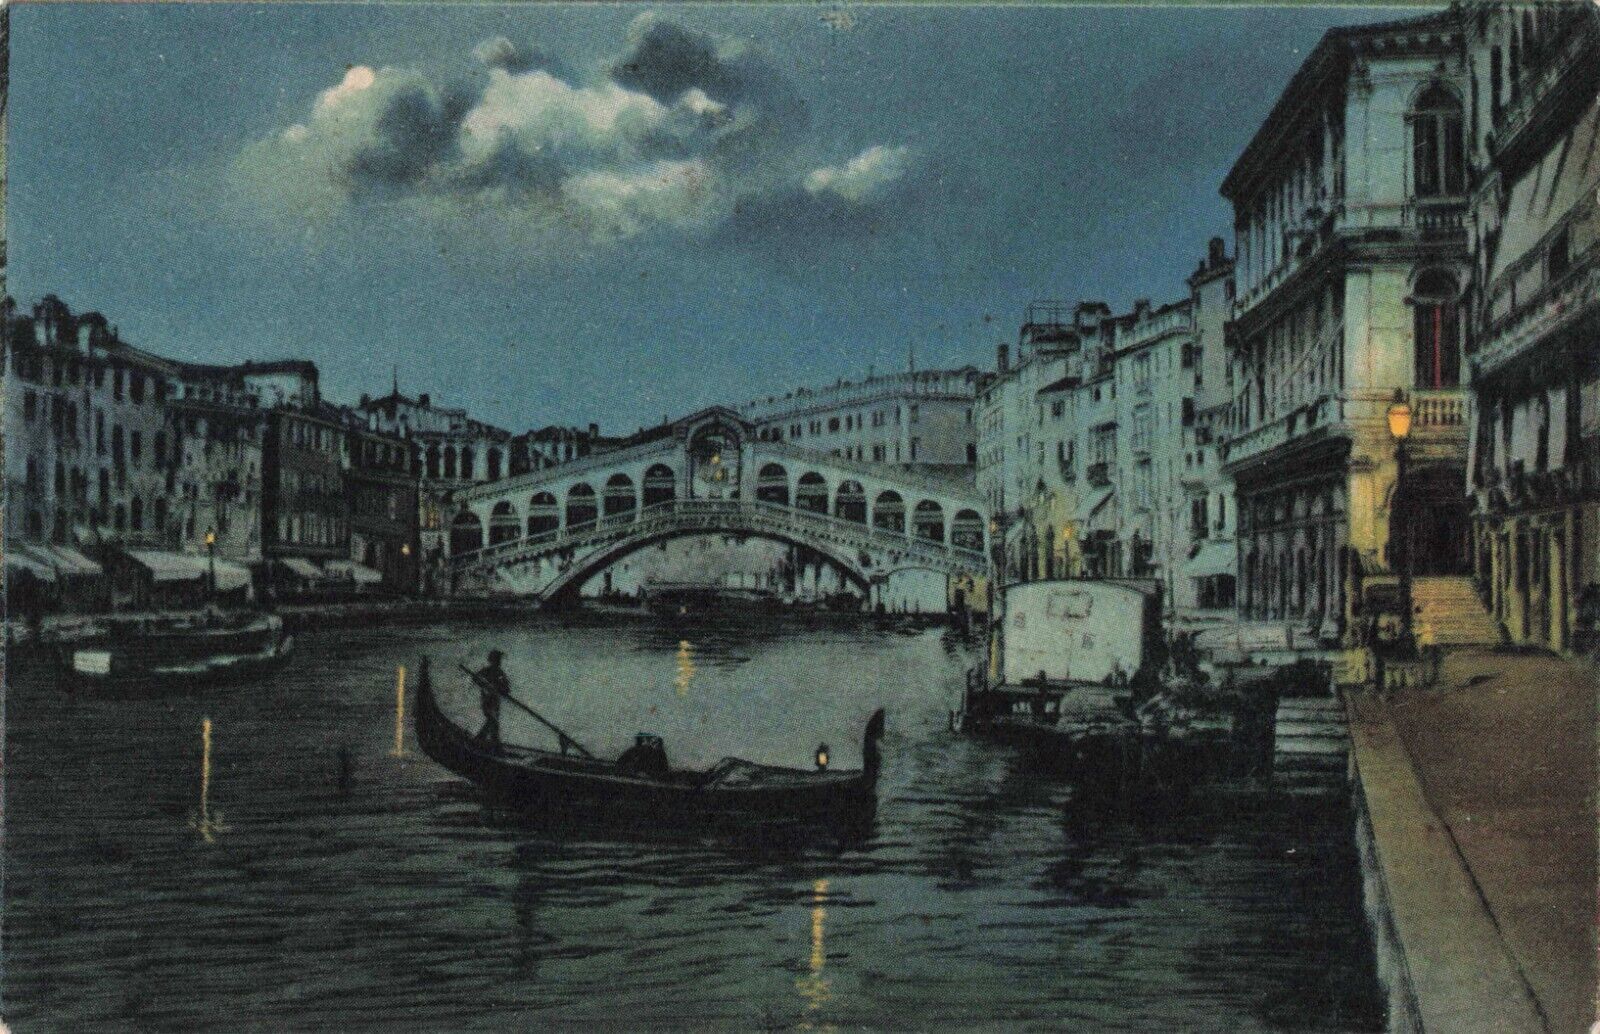 Rialto Bridge at Night Venice Italy c1910 Postcard